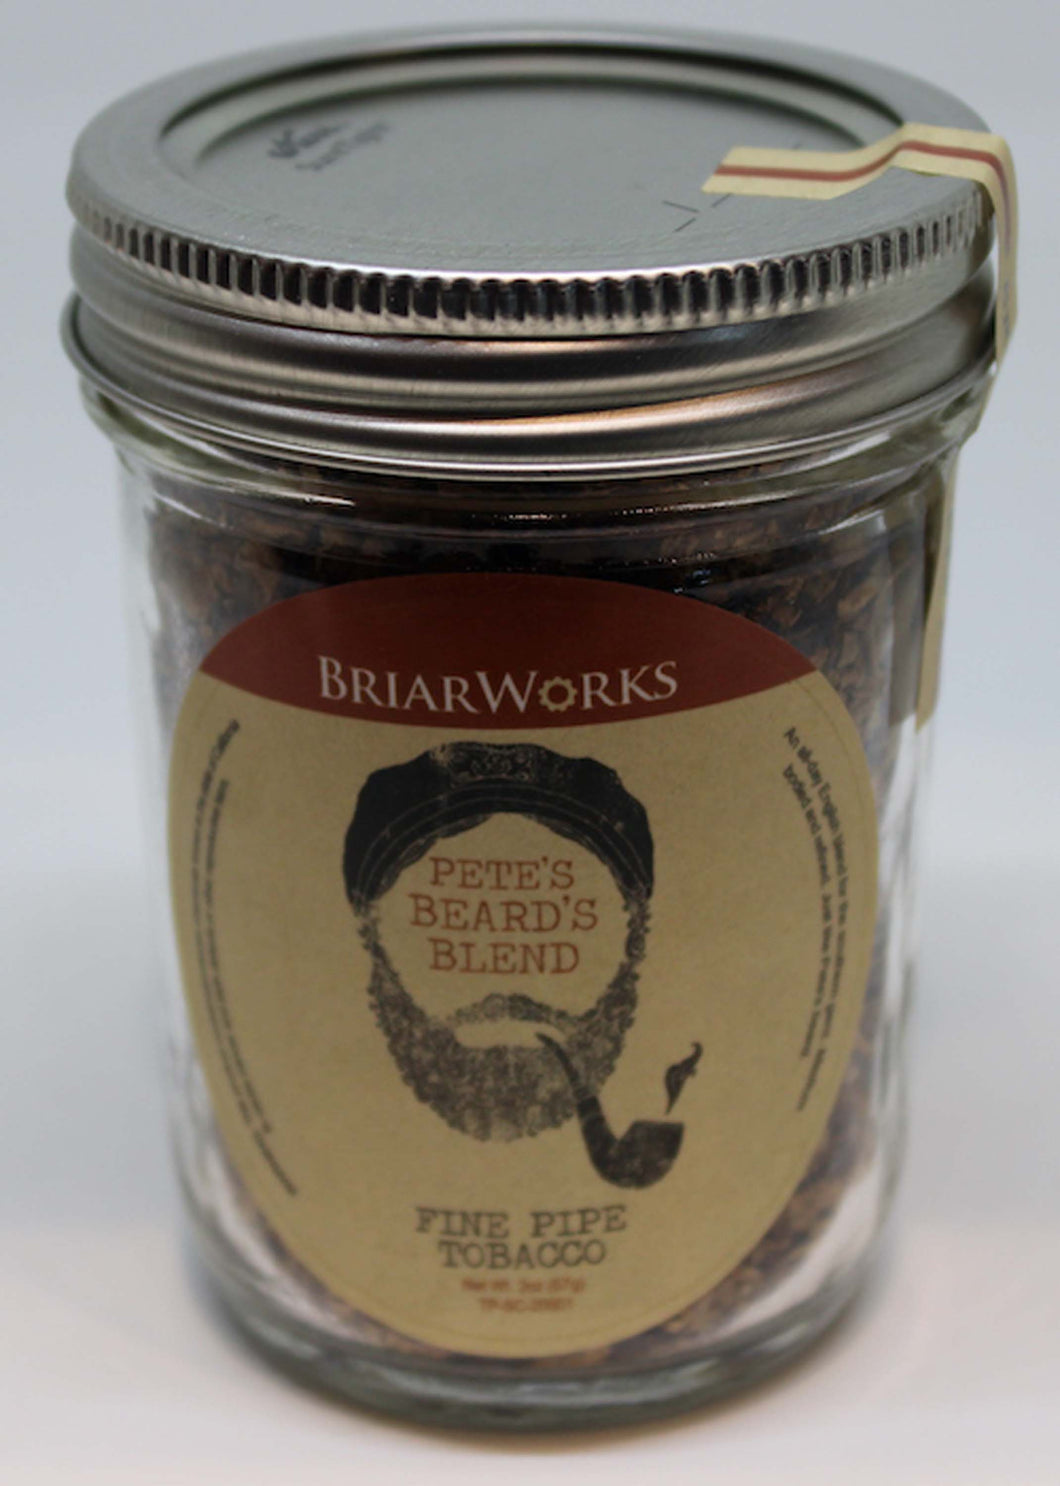 Briarworks Pete's Beard's Blend 2 oz Tin